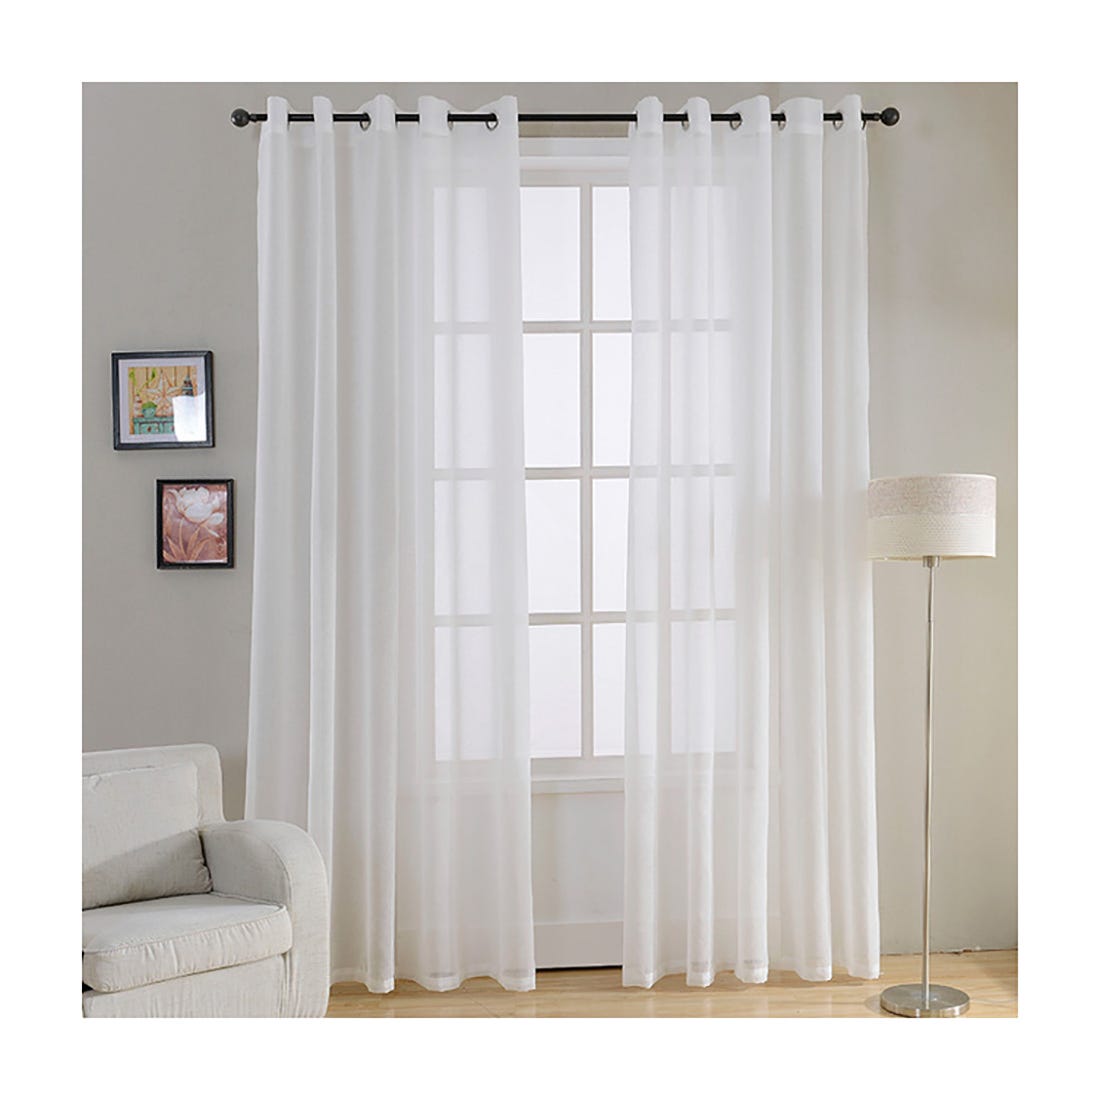 Cortinas traslúcidas de 72 pulgadas de largo, cortinas blancas  transparentes para dormitorio, sala de estar, ventana, cortinas blancas  transparentes